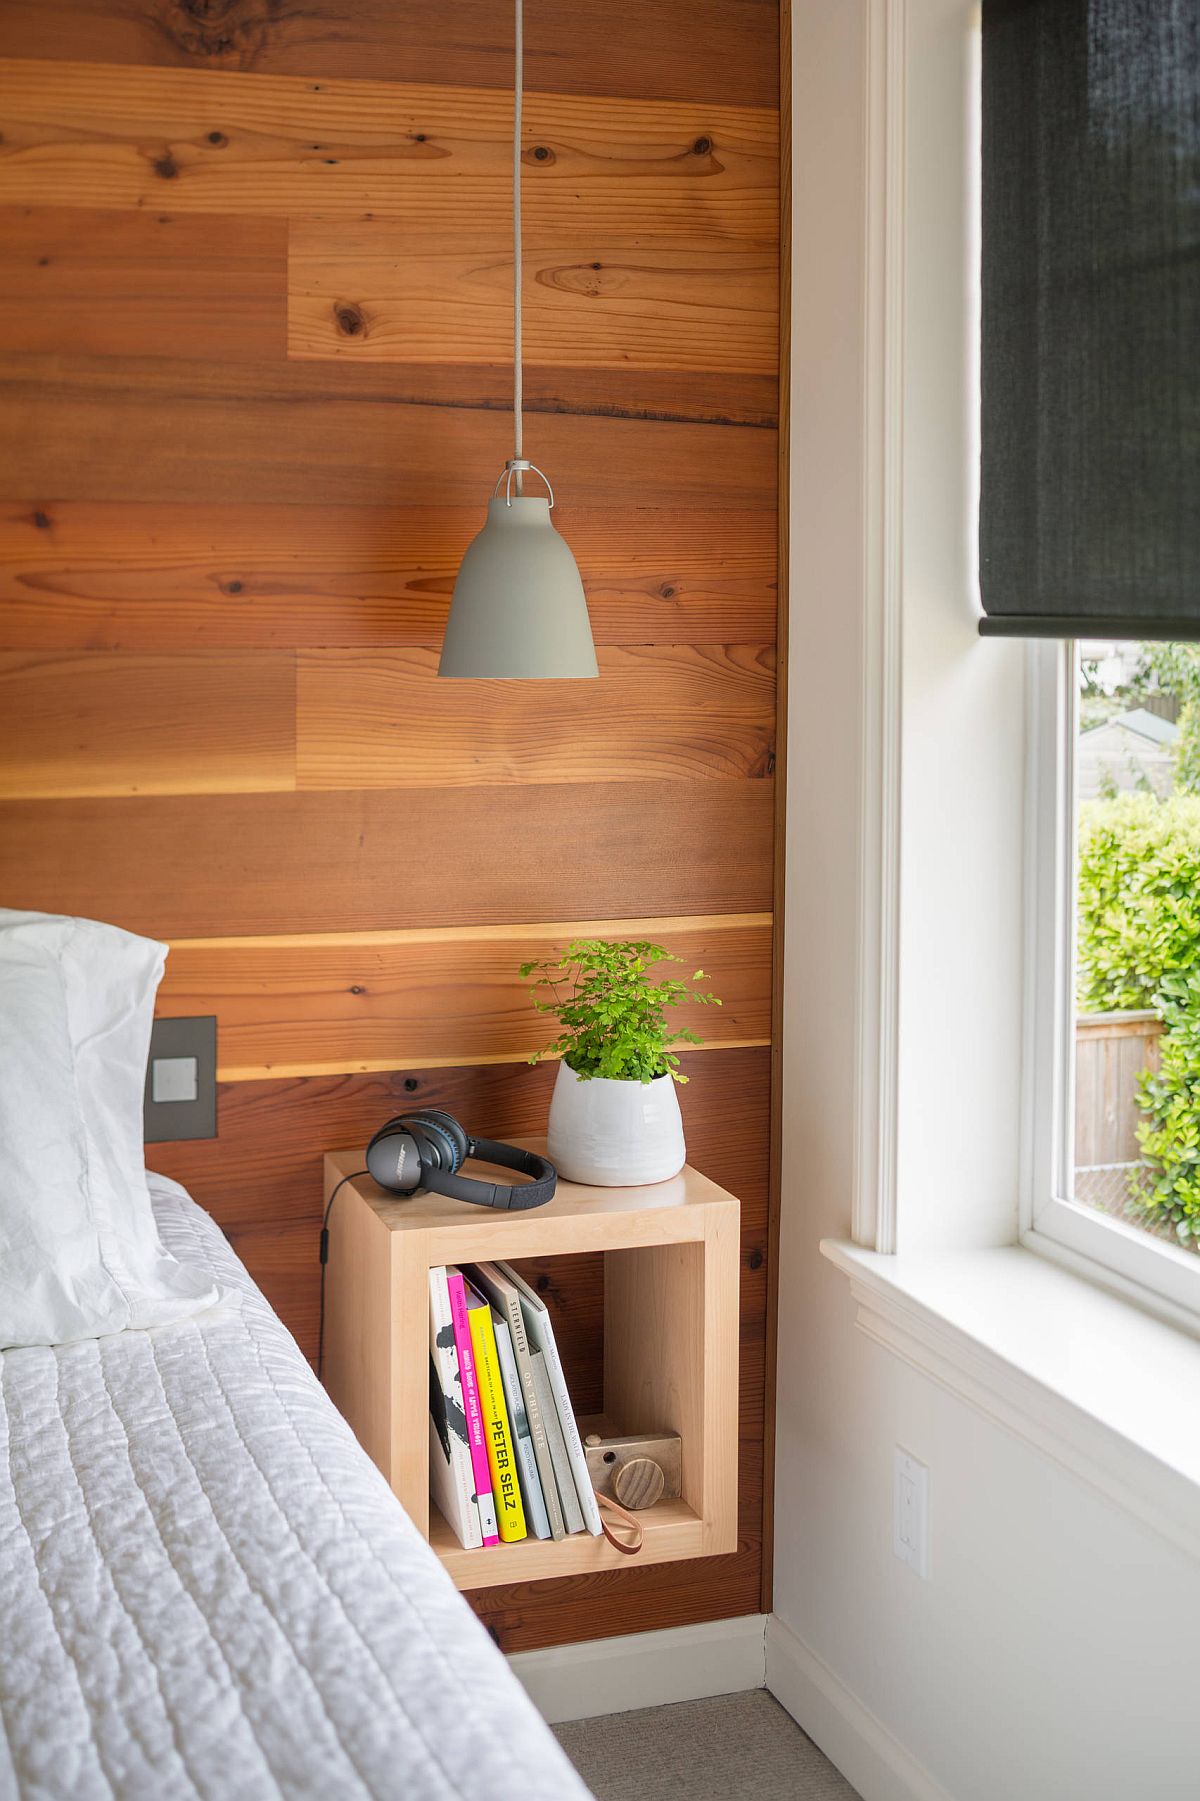 Sleek gray bedside pendant saves space and illuminates the corner